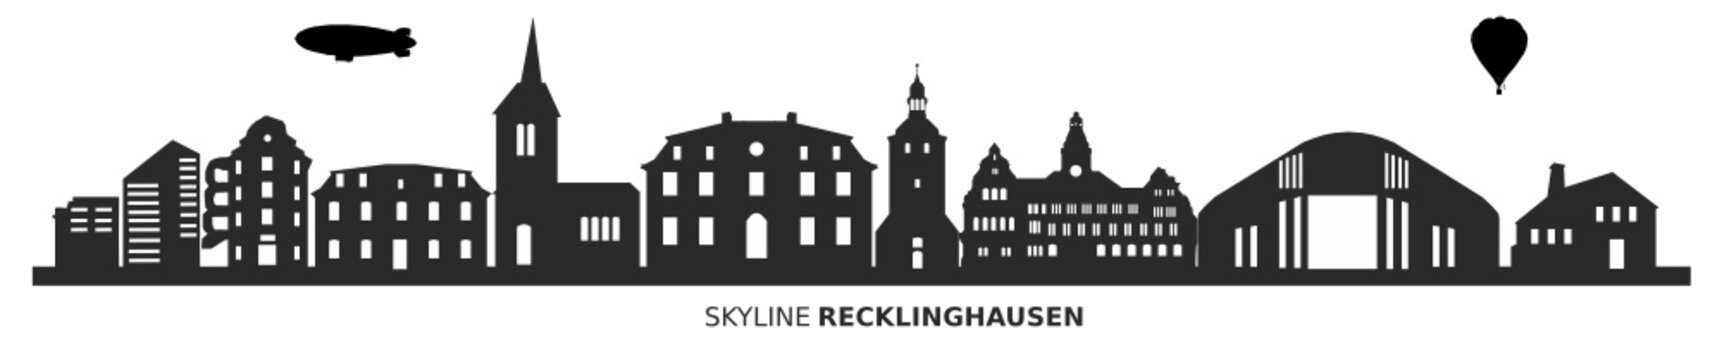 Skyline Recklinghausen